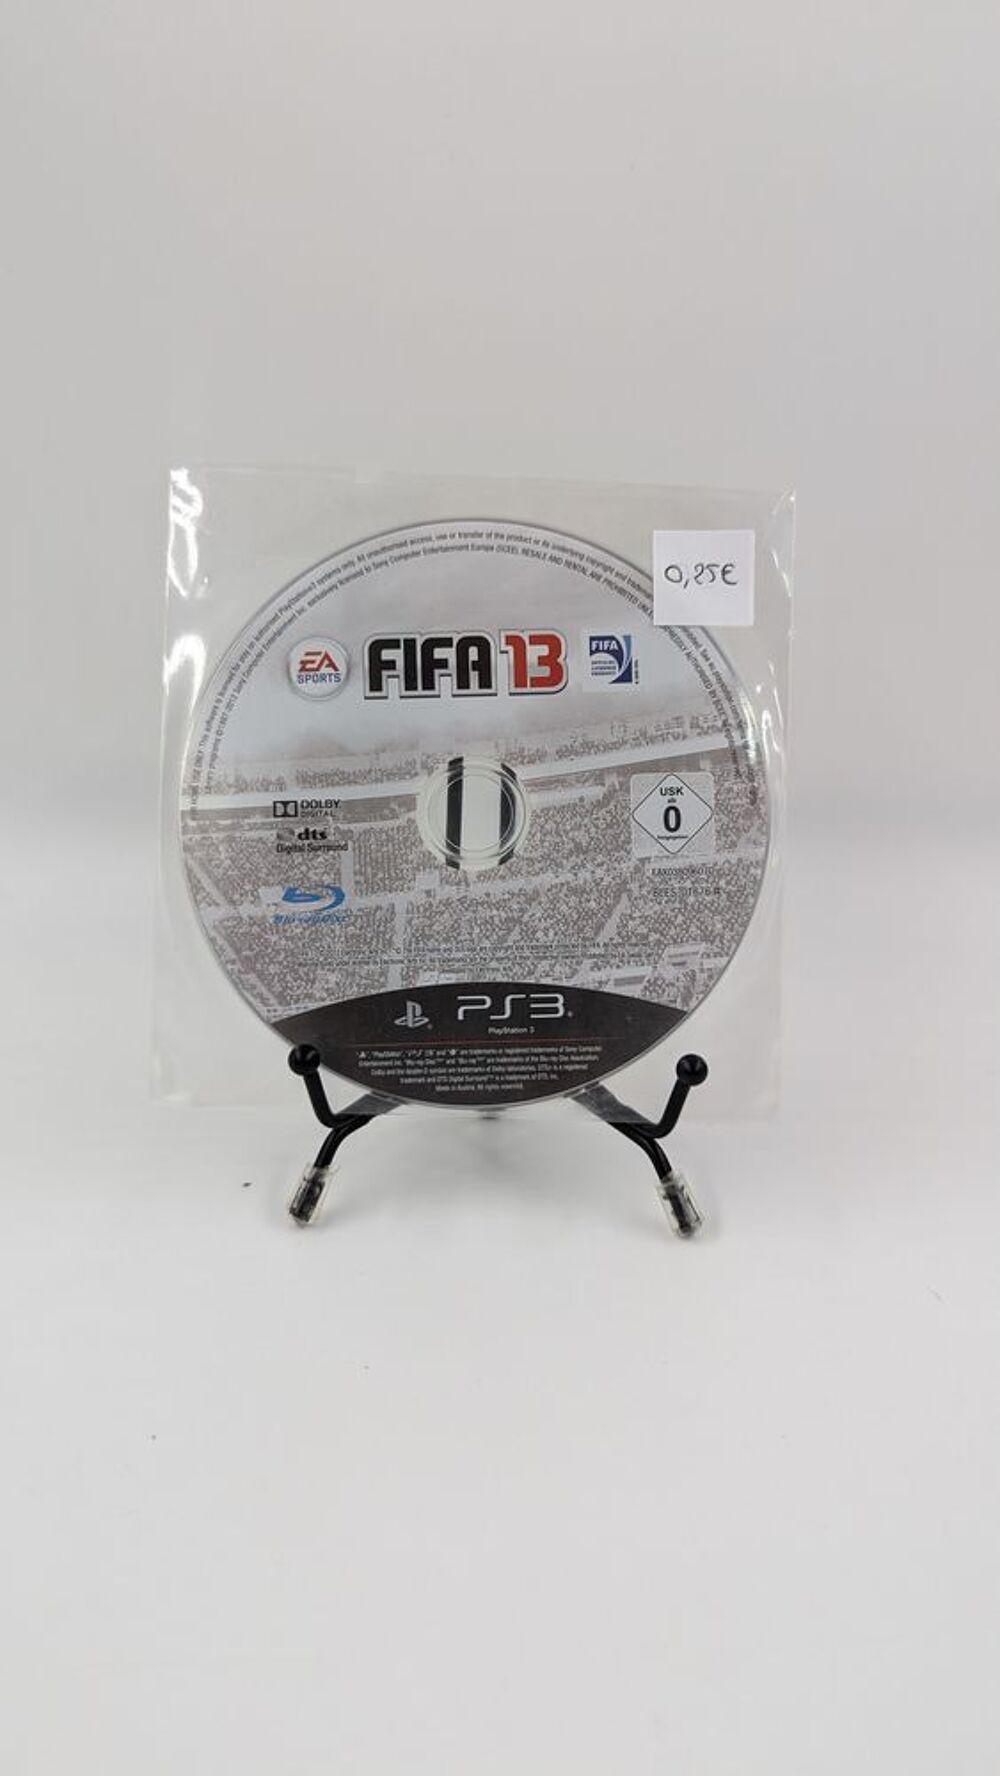 Jeu PS3 Playstation 3 Fifa 13 en loose Consoles et jeux vidos